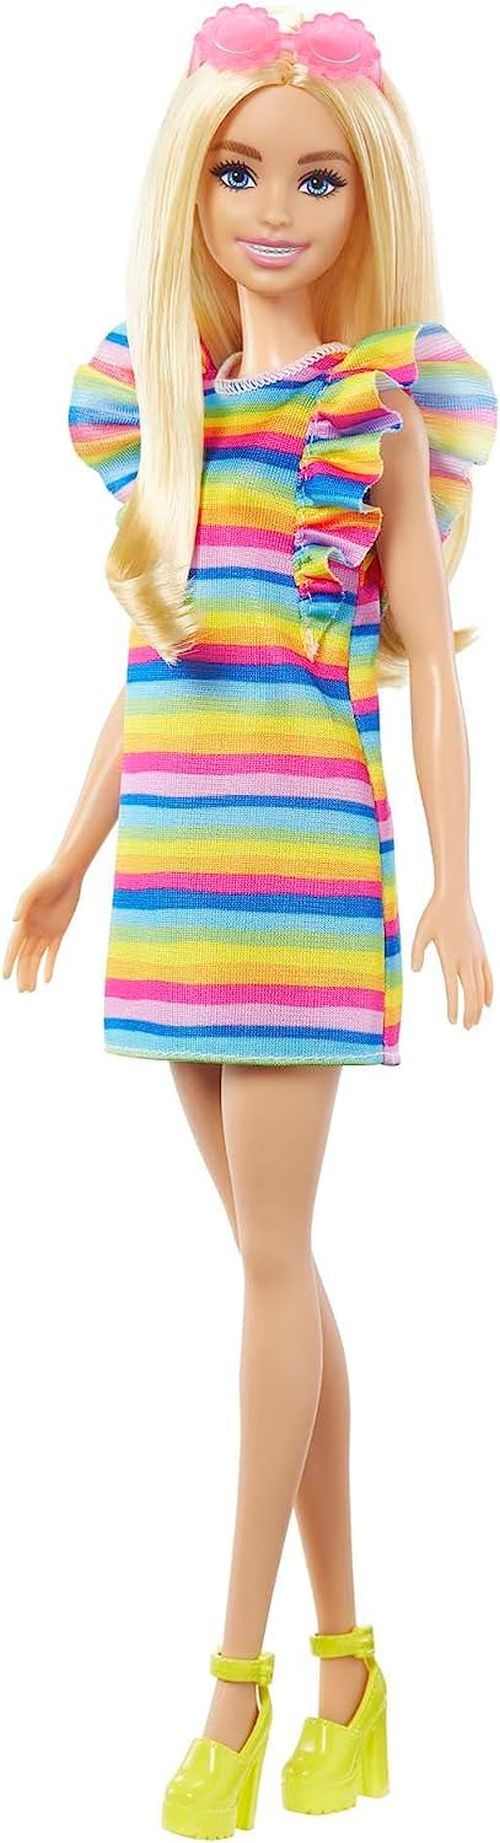 MATTEL Barbie In A Colorful Striped Dress - DOLLS